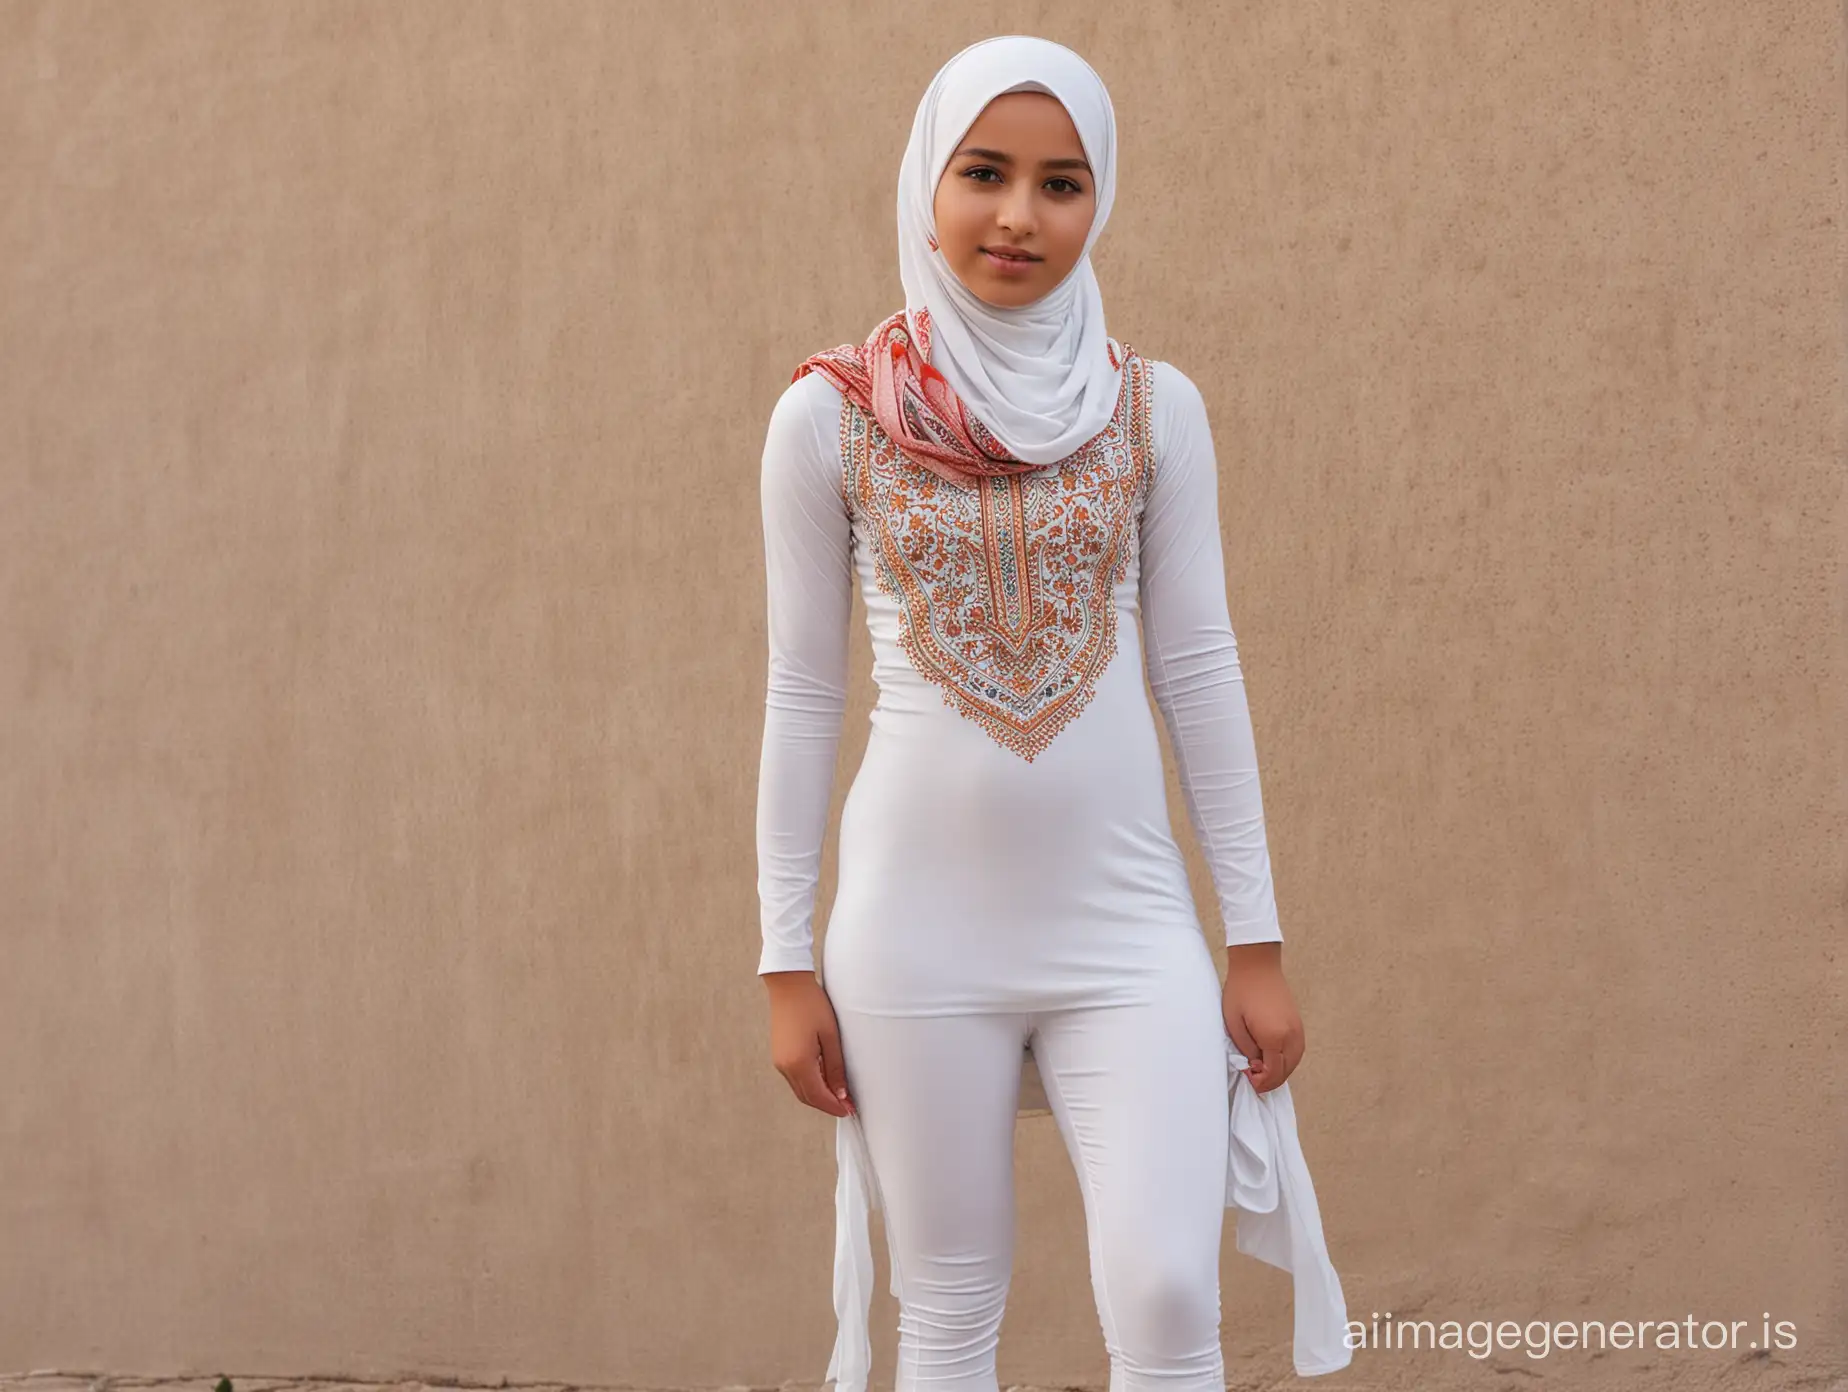 Muslim-Girl-in-White-Leggings-and-Tight-Dress